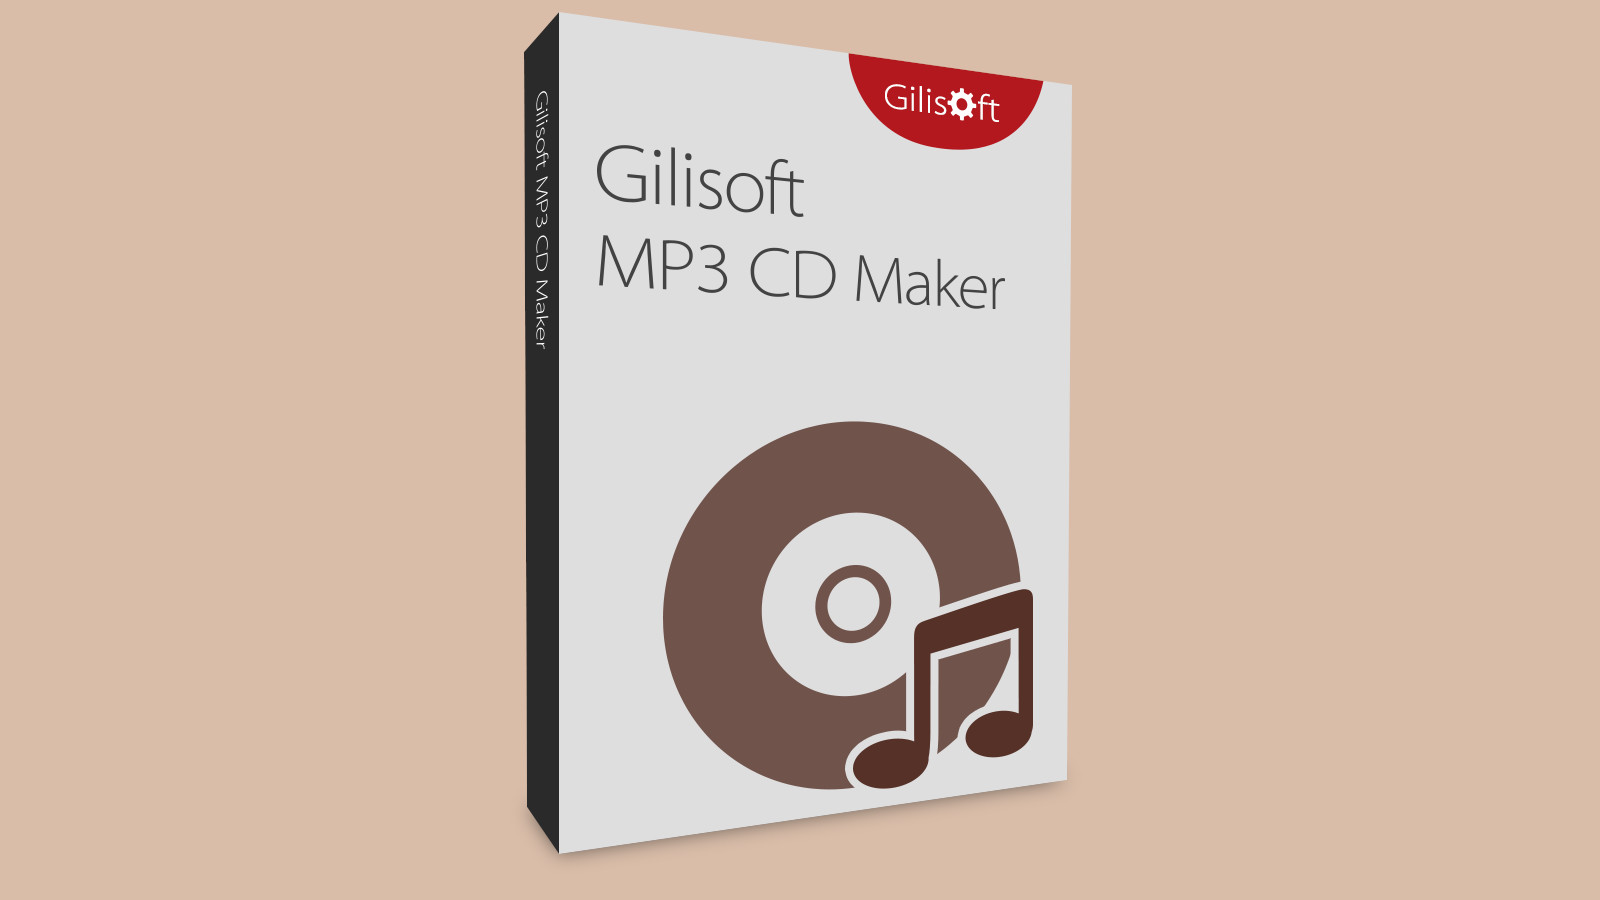 Gilisoft MP3 CD Maker CD Key [$ 5.65]